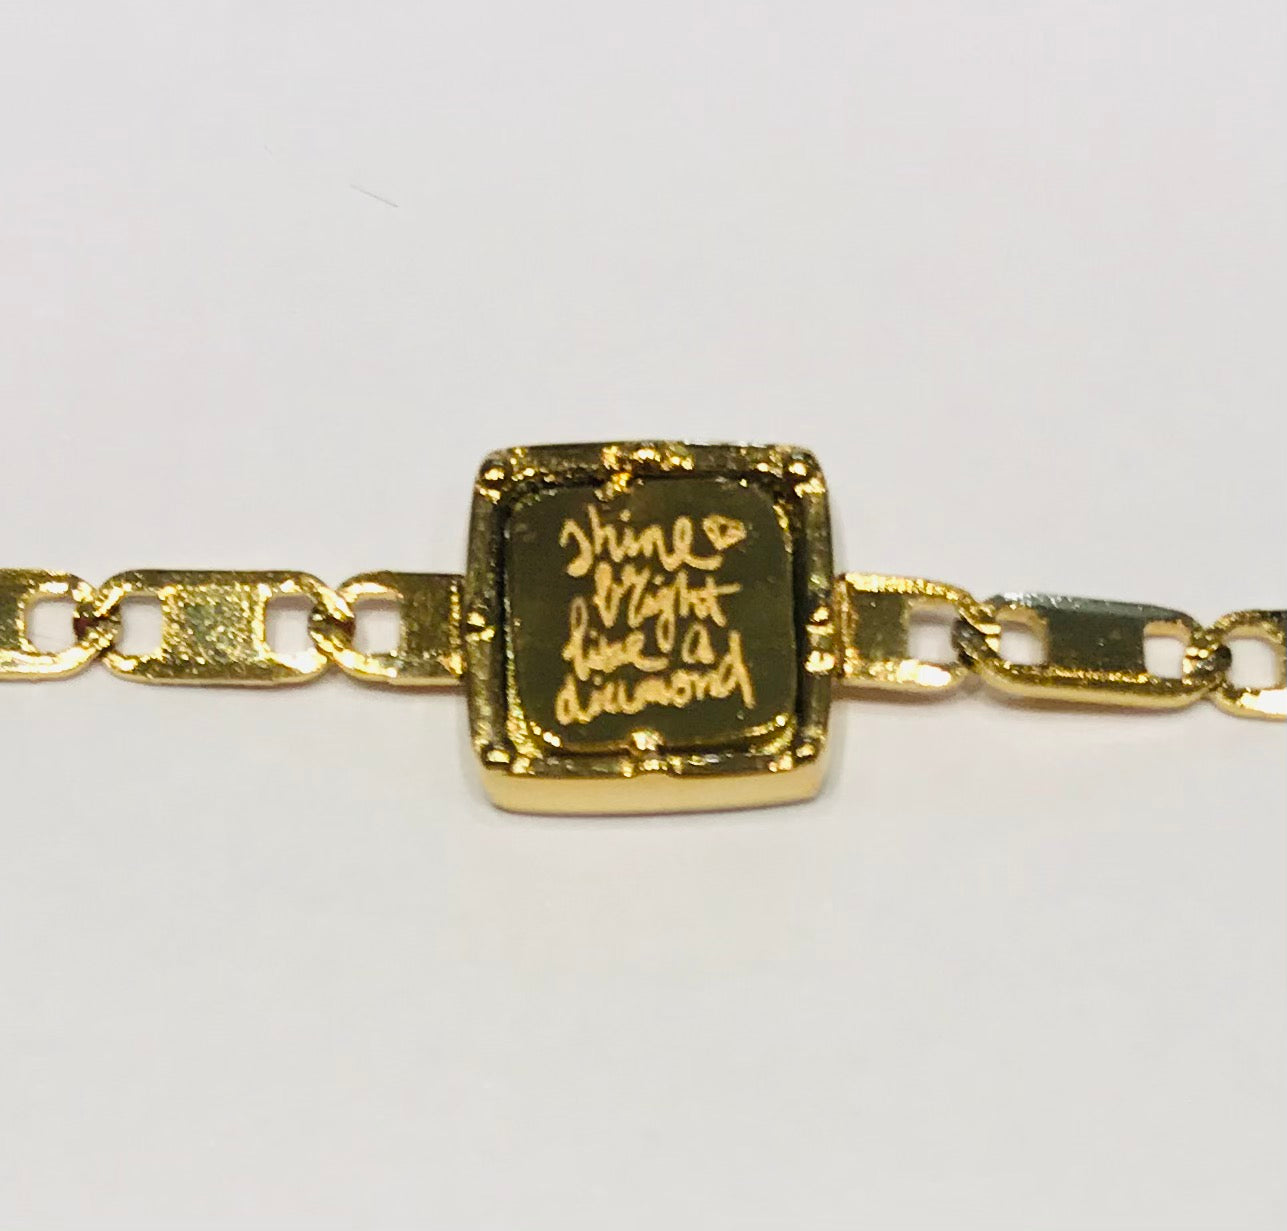 SAM&CEL bracelet goldplated with square